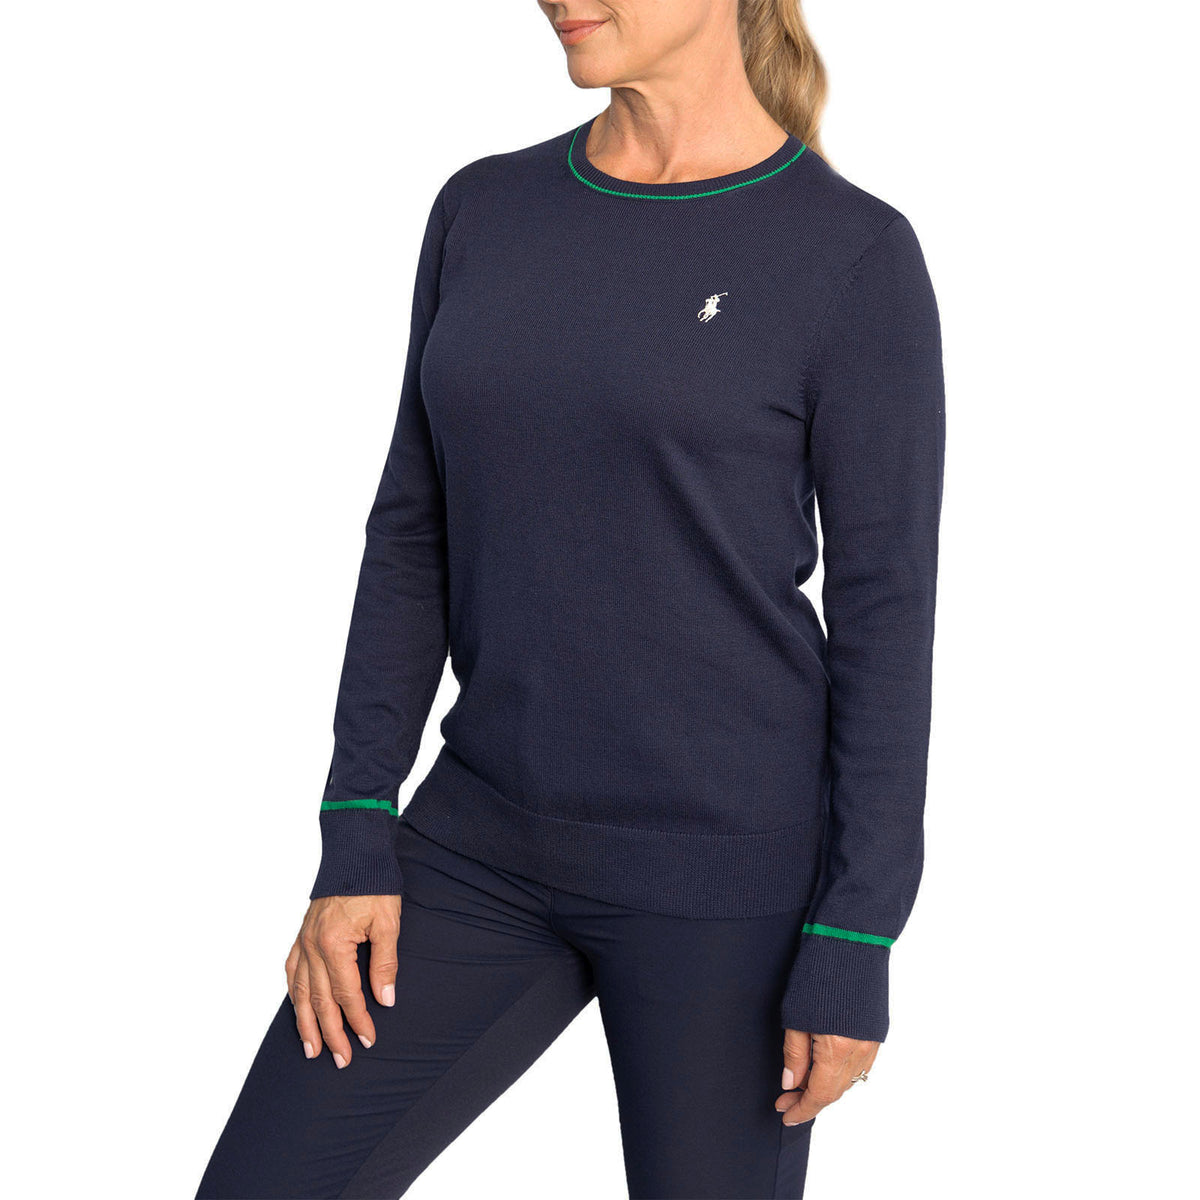 RLX Ralph Lauren Women's Cotton Blend Knit Pullover - French Navy/Cruise Green